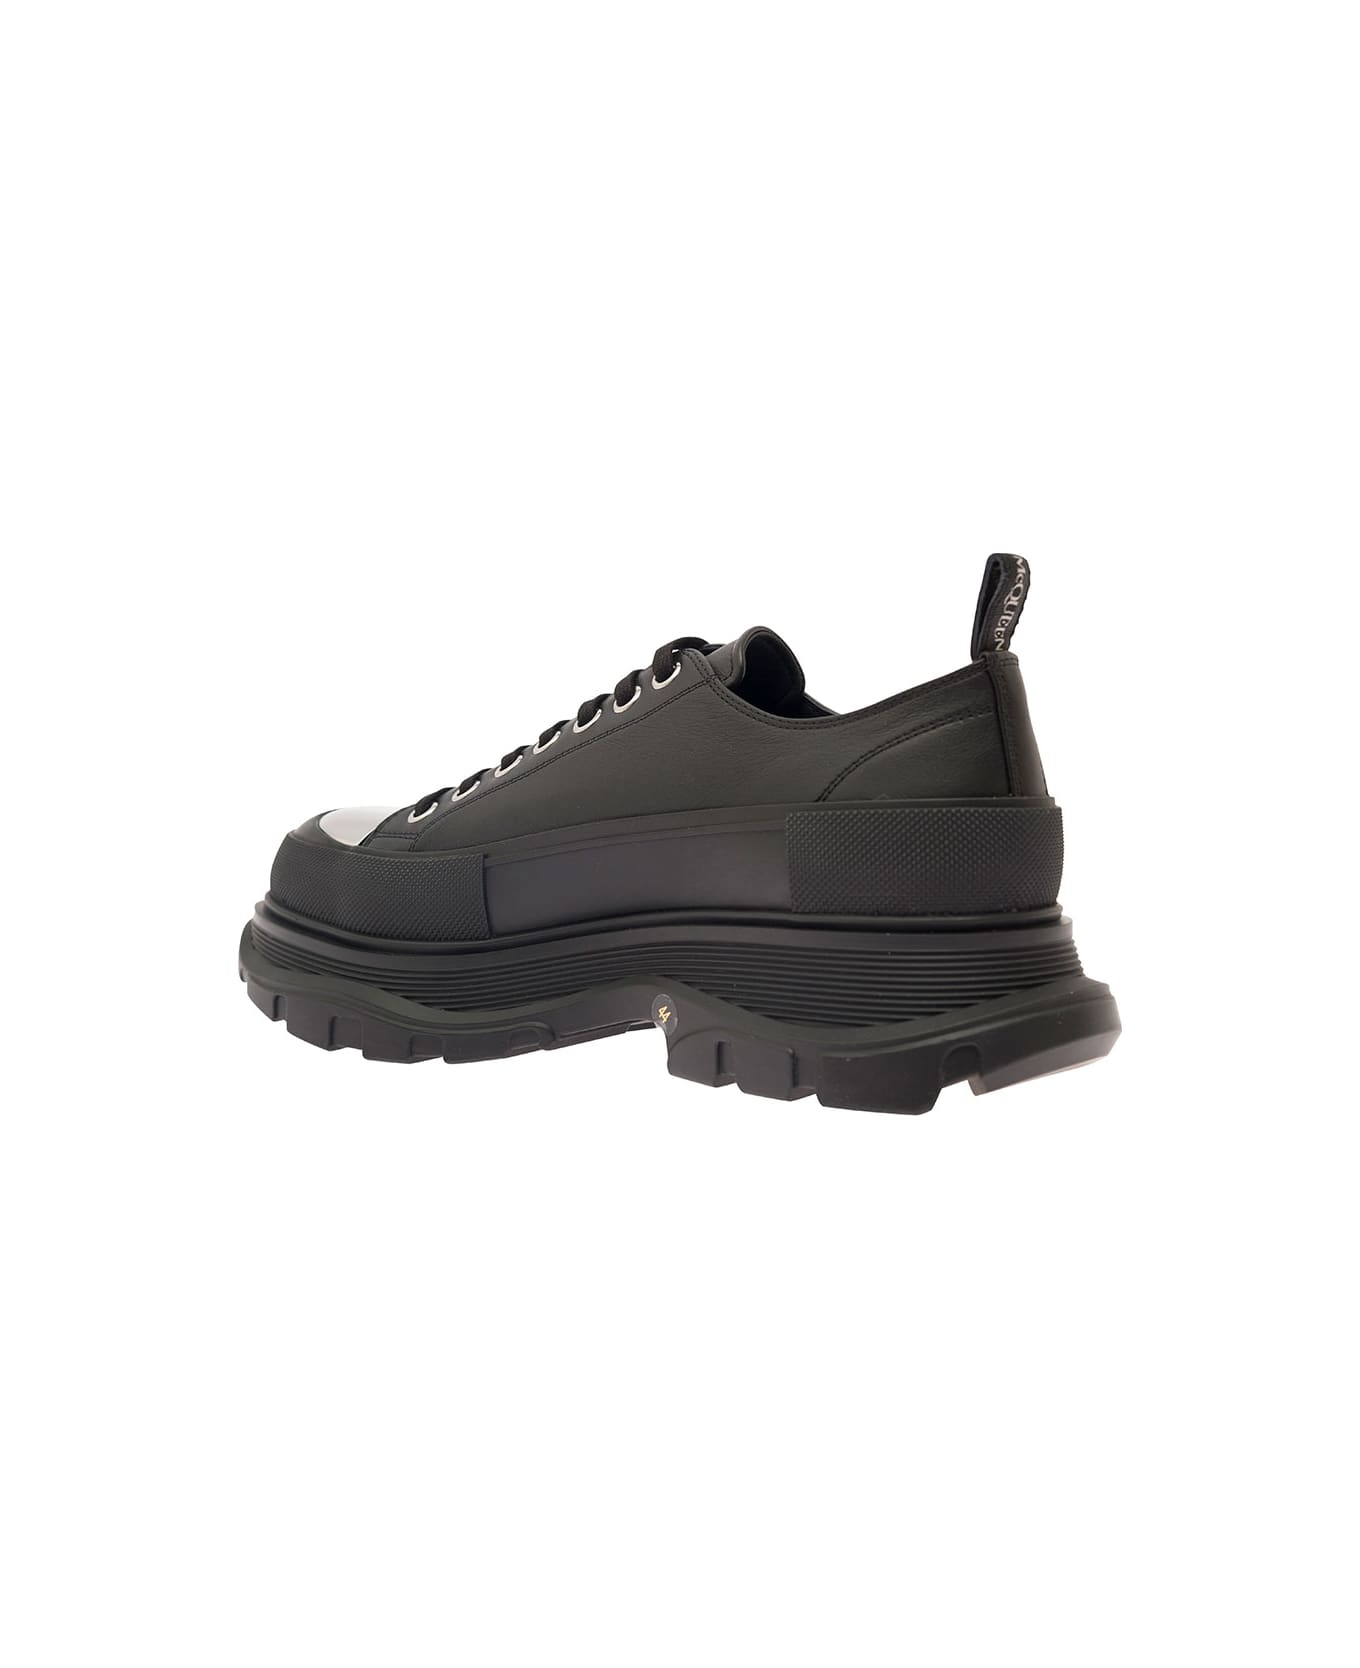 Alexander McQueen 'trade Slick' Black Sneakers With Oversized Platform And Metallic Toe In Leather Man - Black